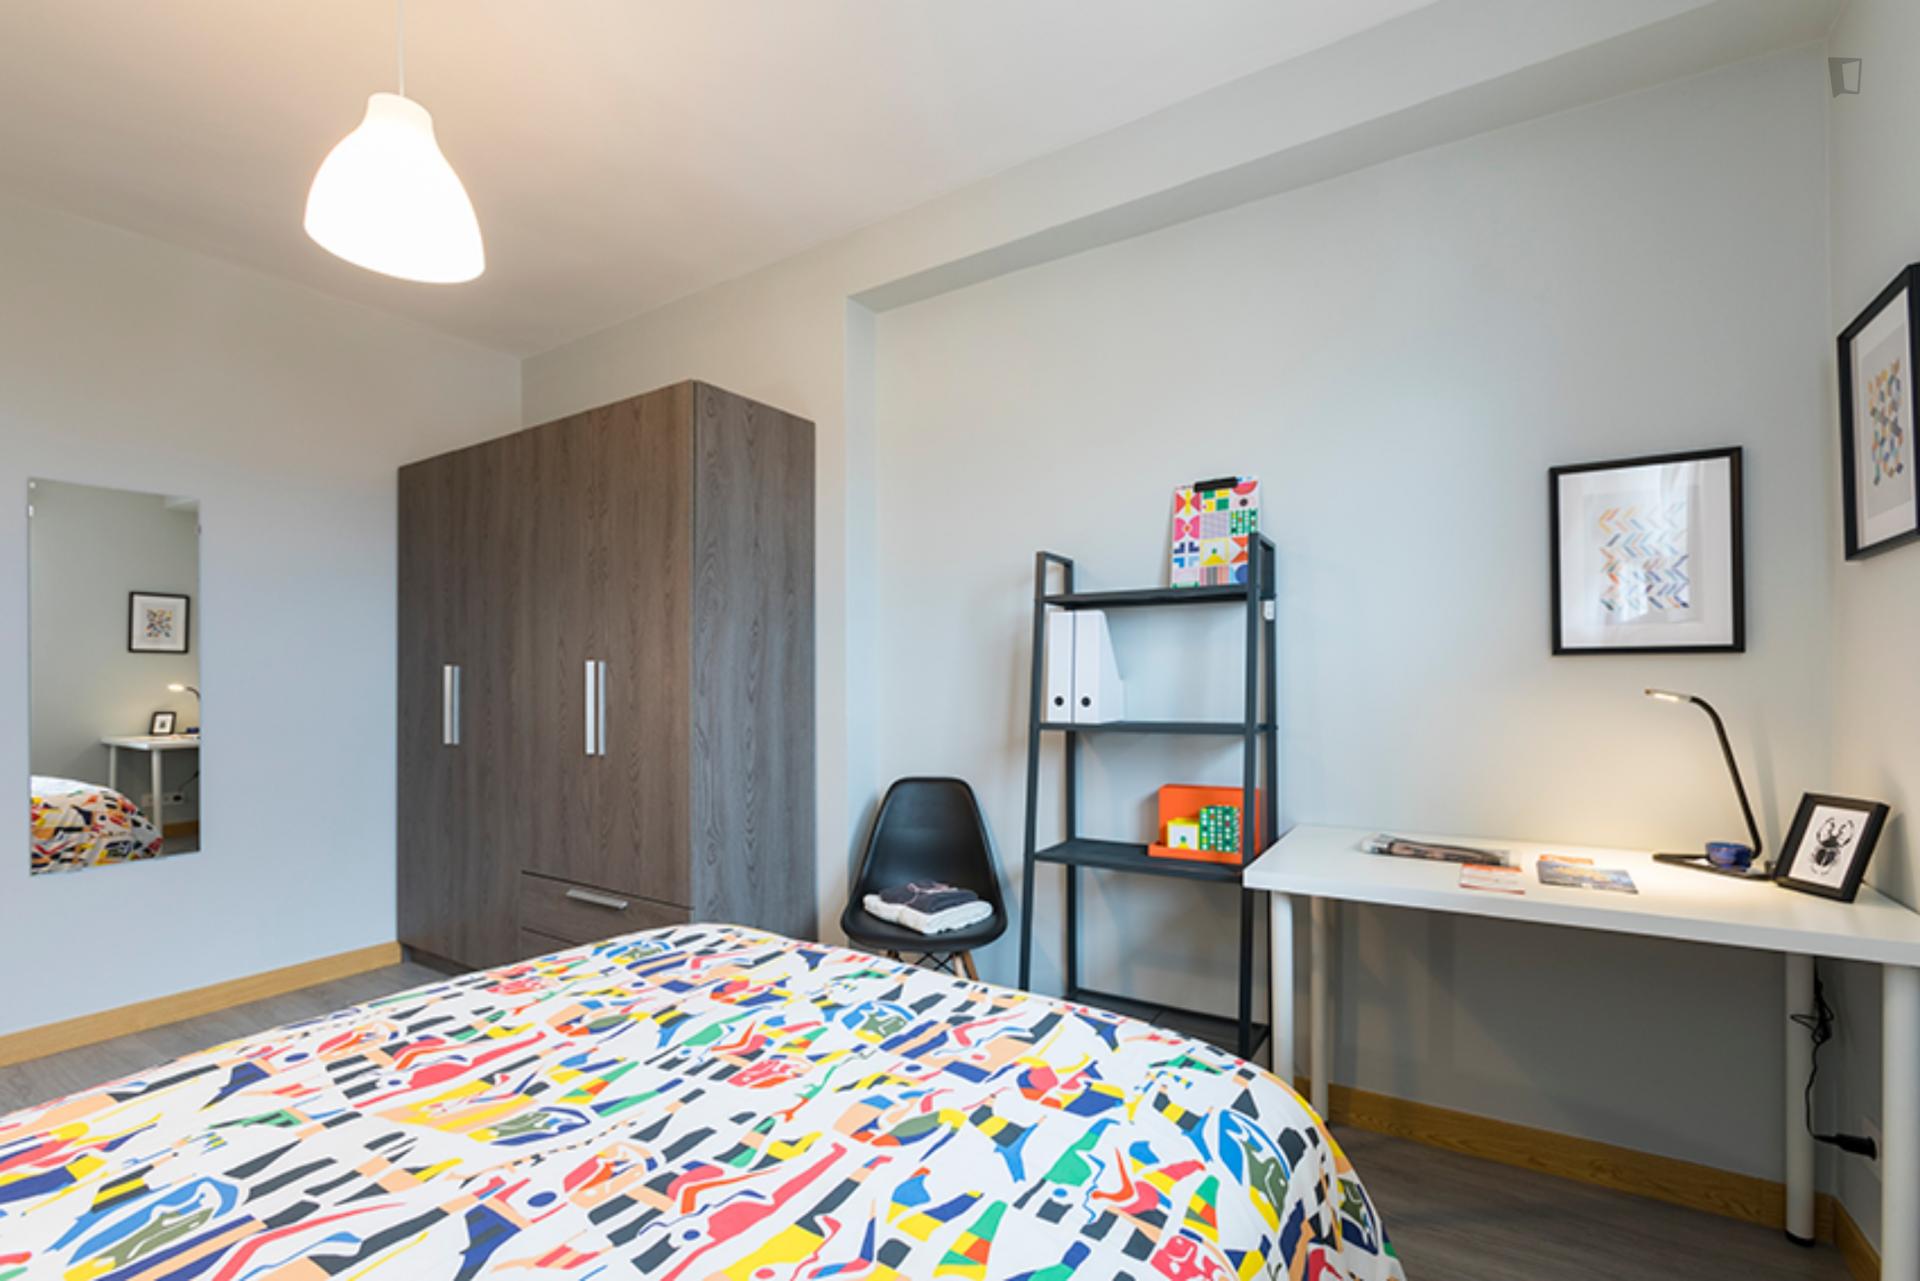 Zurbaranbarri - Bedroom in flat in Bilbao